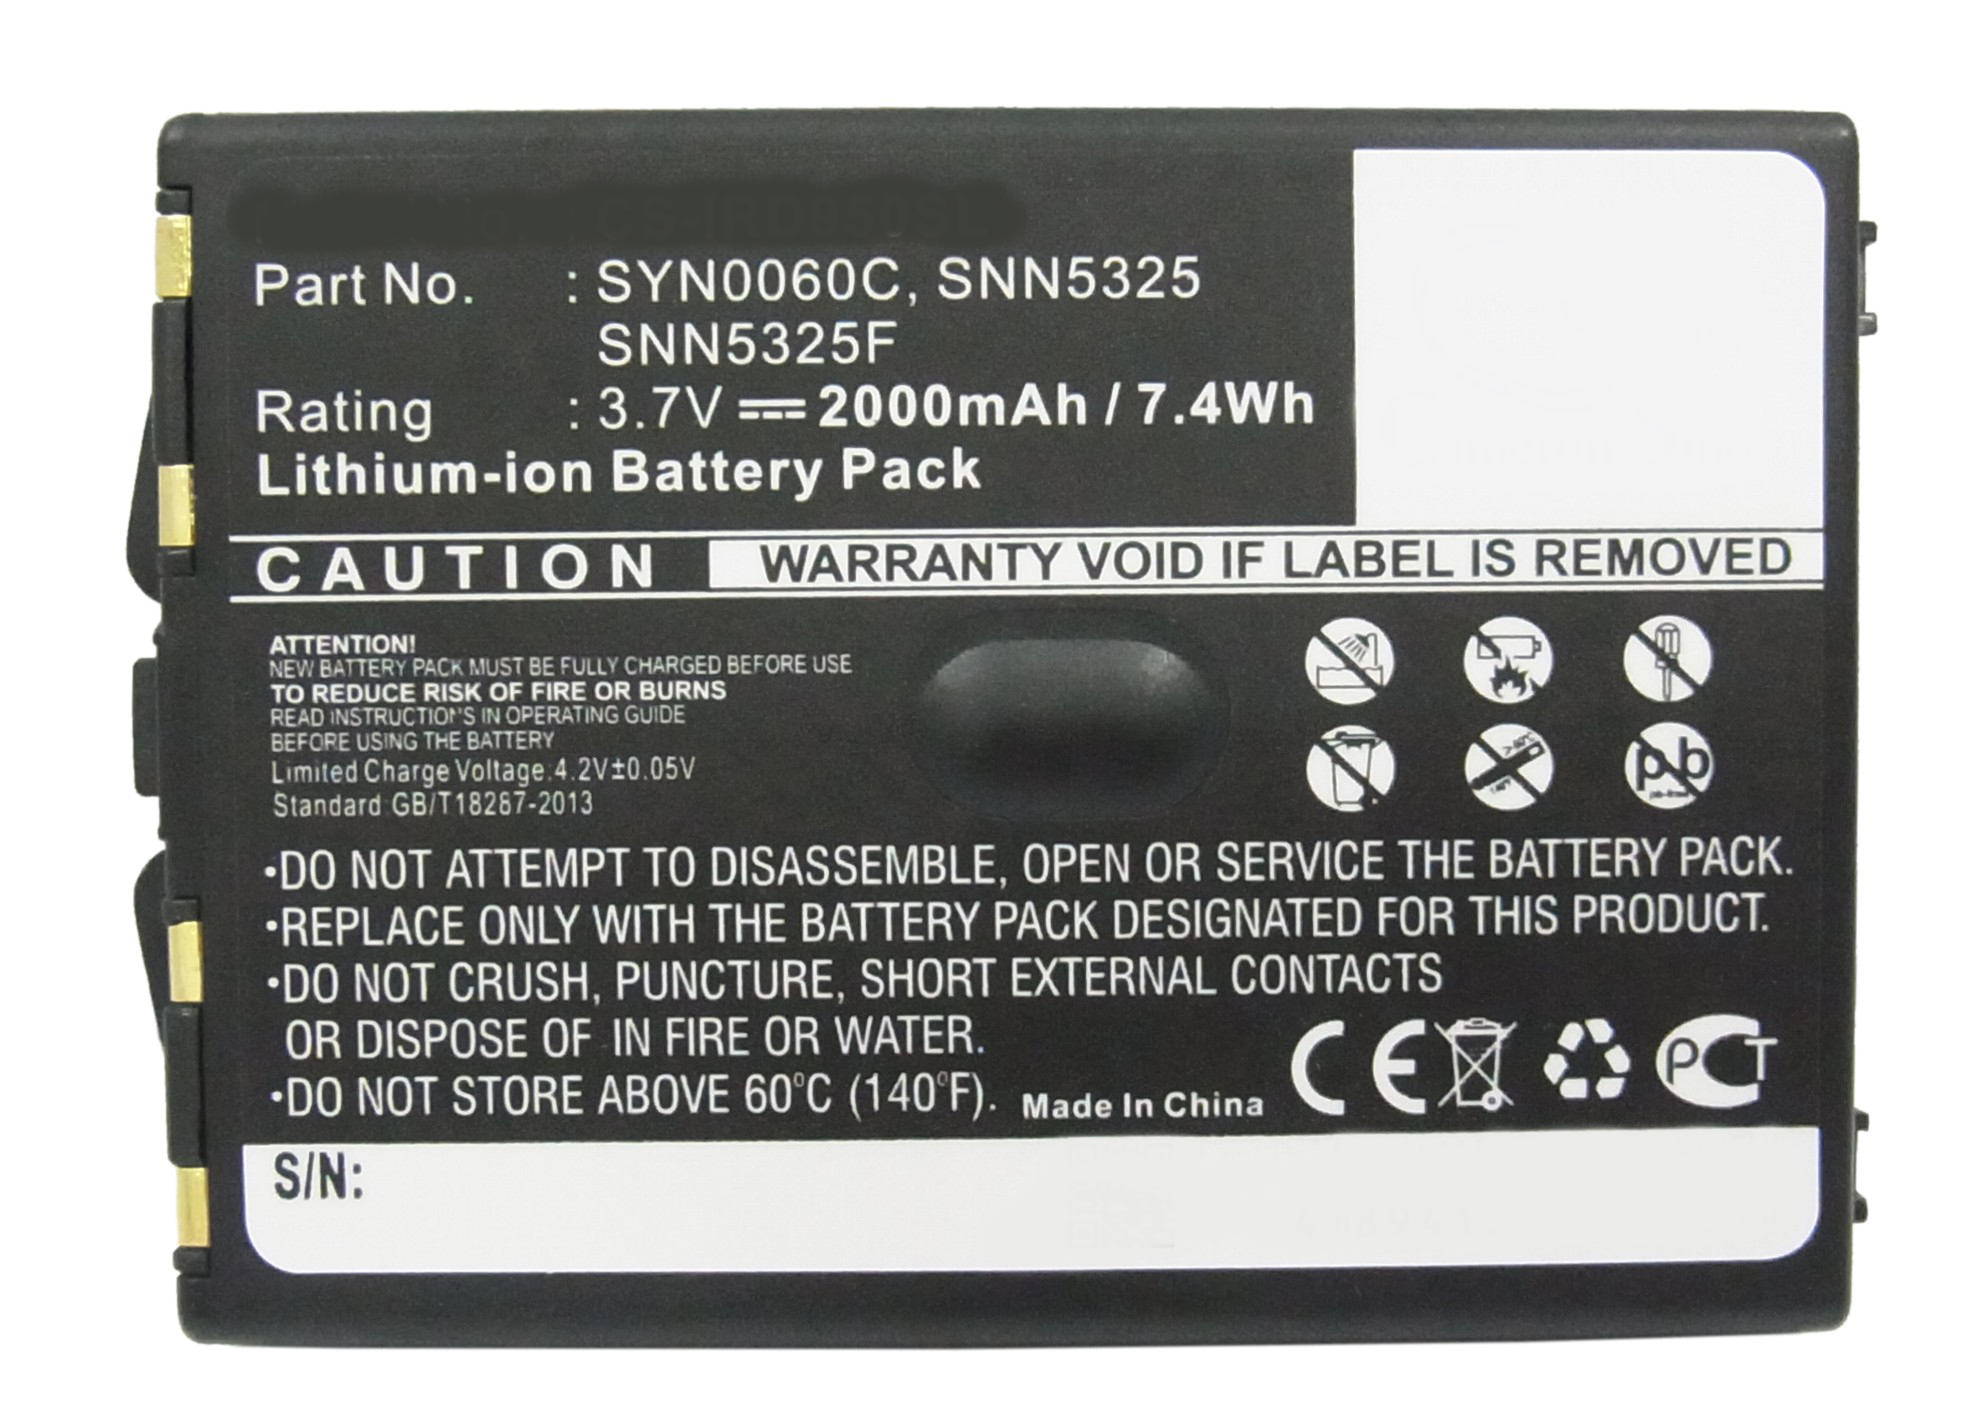 Batteries for IridiumReplacement